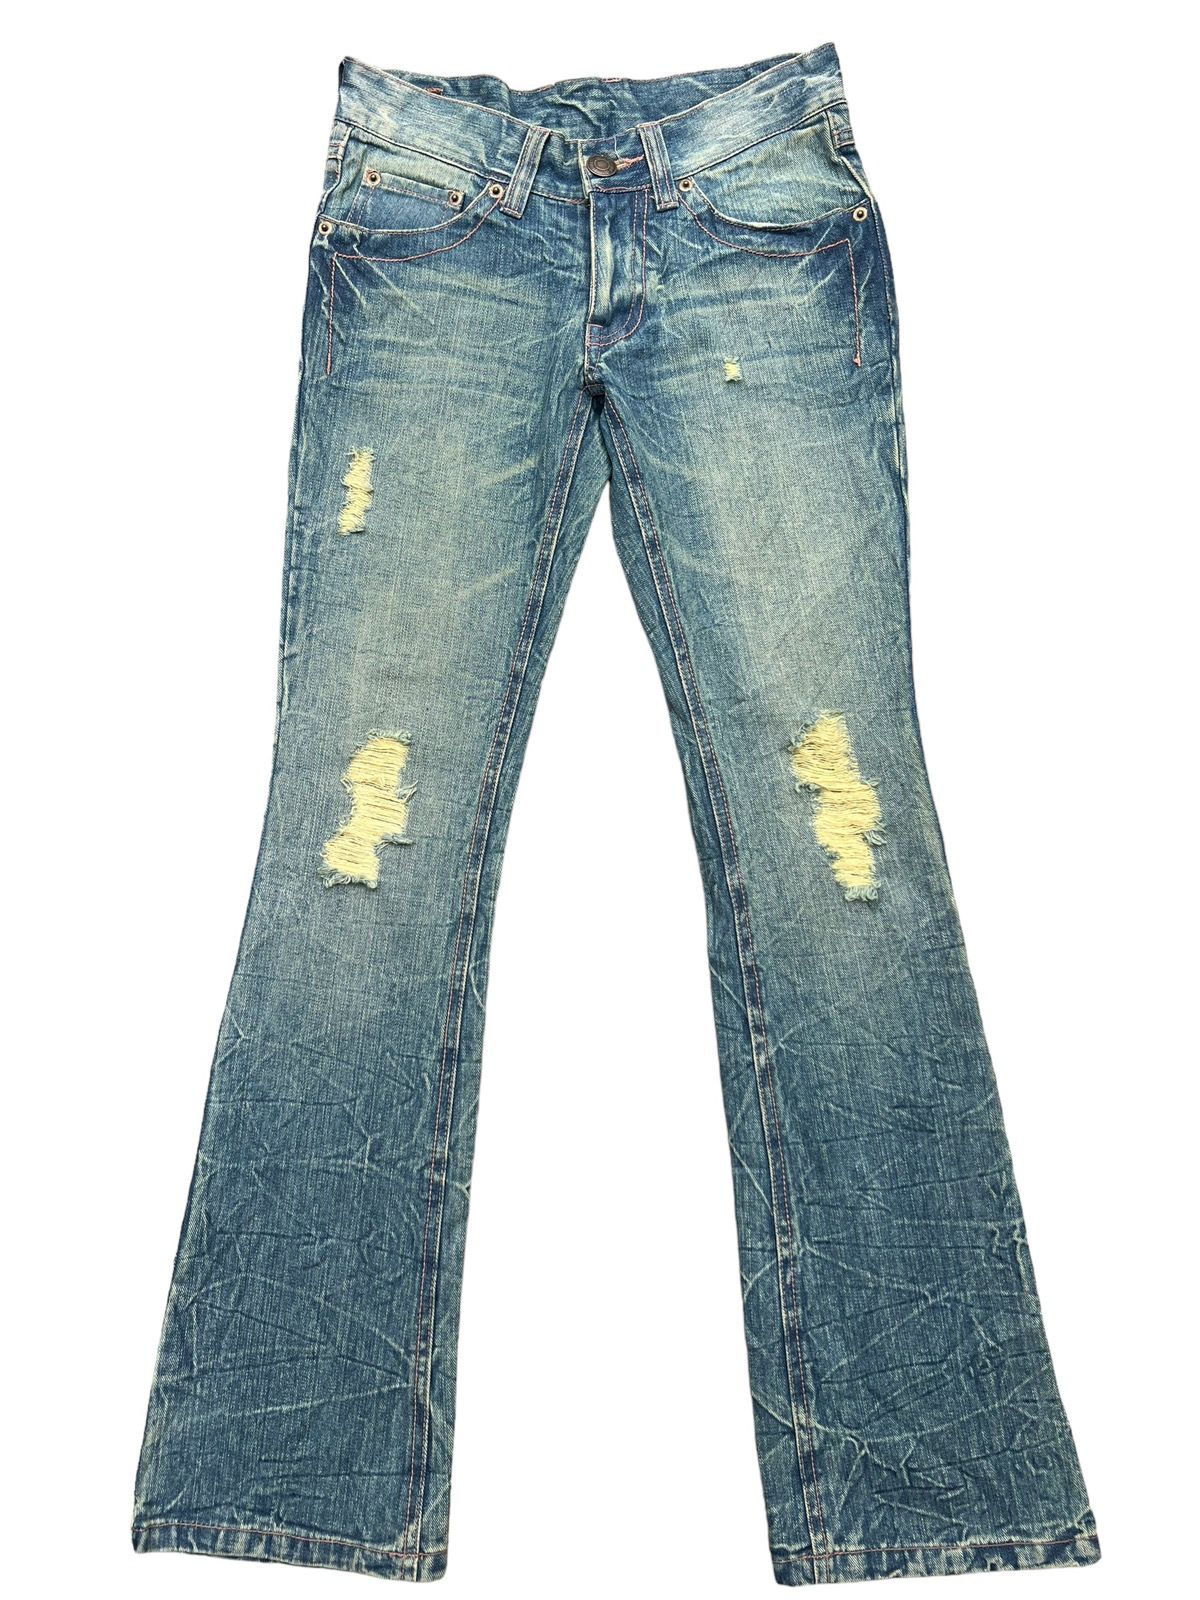 Hype - Japanese Brand Distressed Mudwash Flare Denim Jeans 28x30.5 - 2